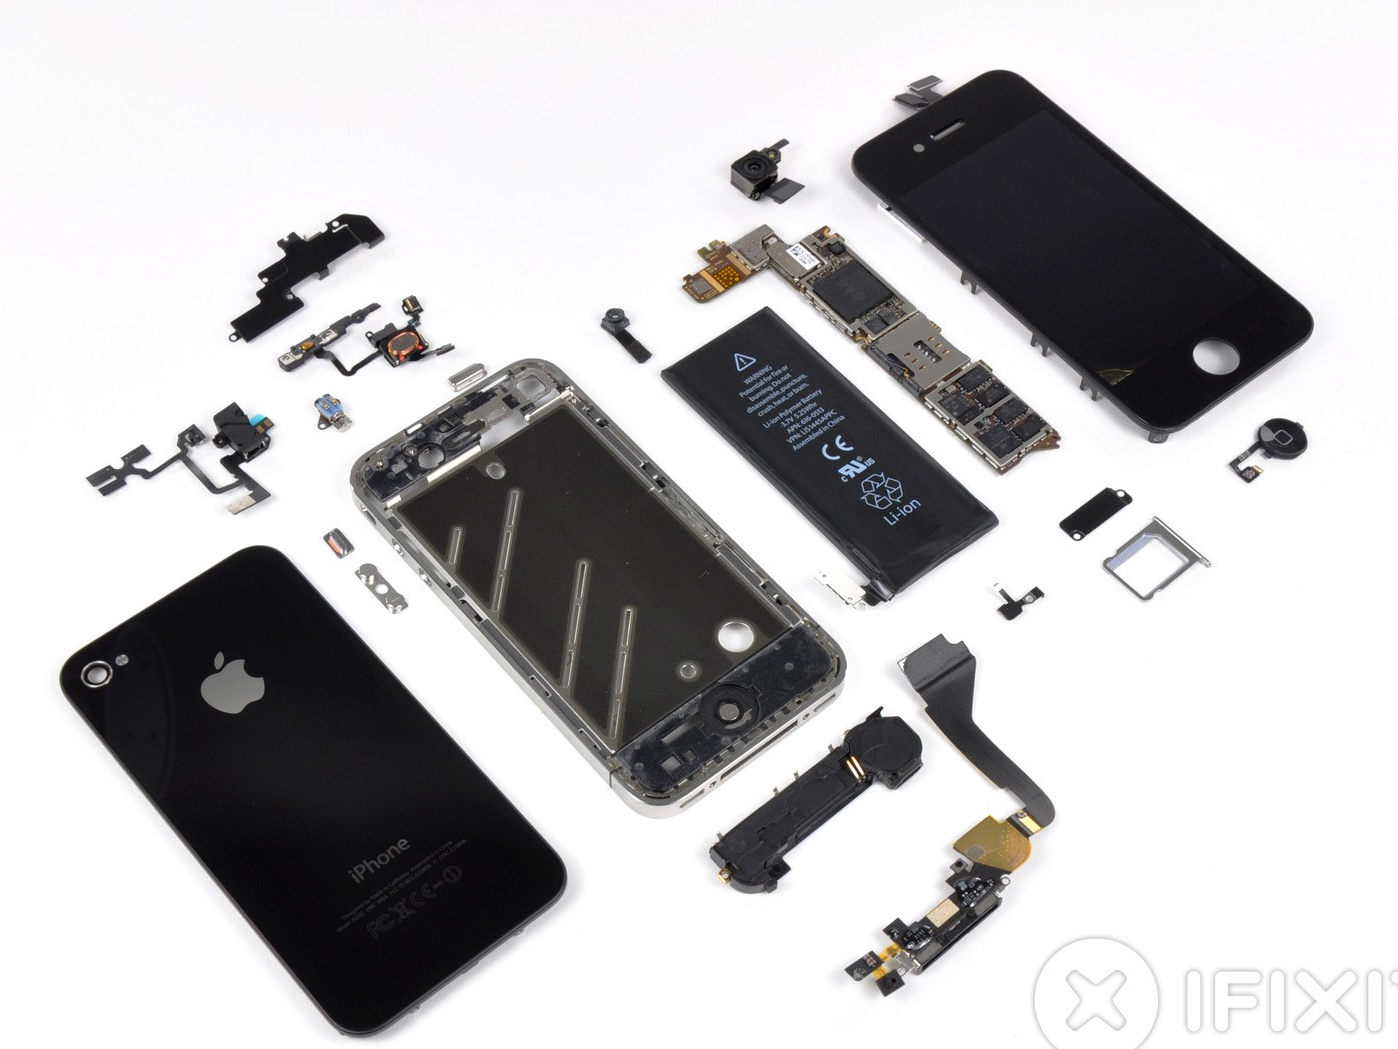 iPhone 4S拆解-苹果,Apple,iPhone 4S ——快科技(原驱动之家)--全球最新科技资讯专业发布平台